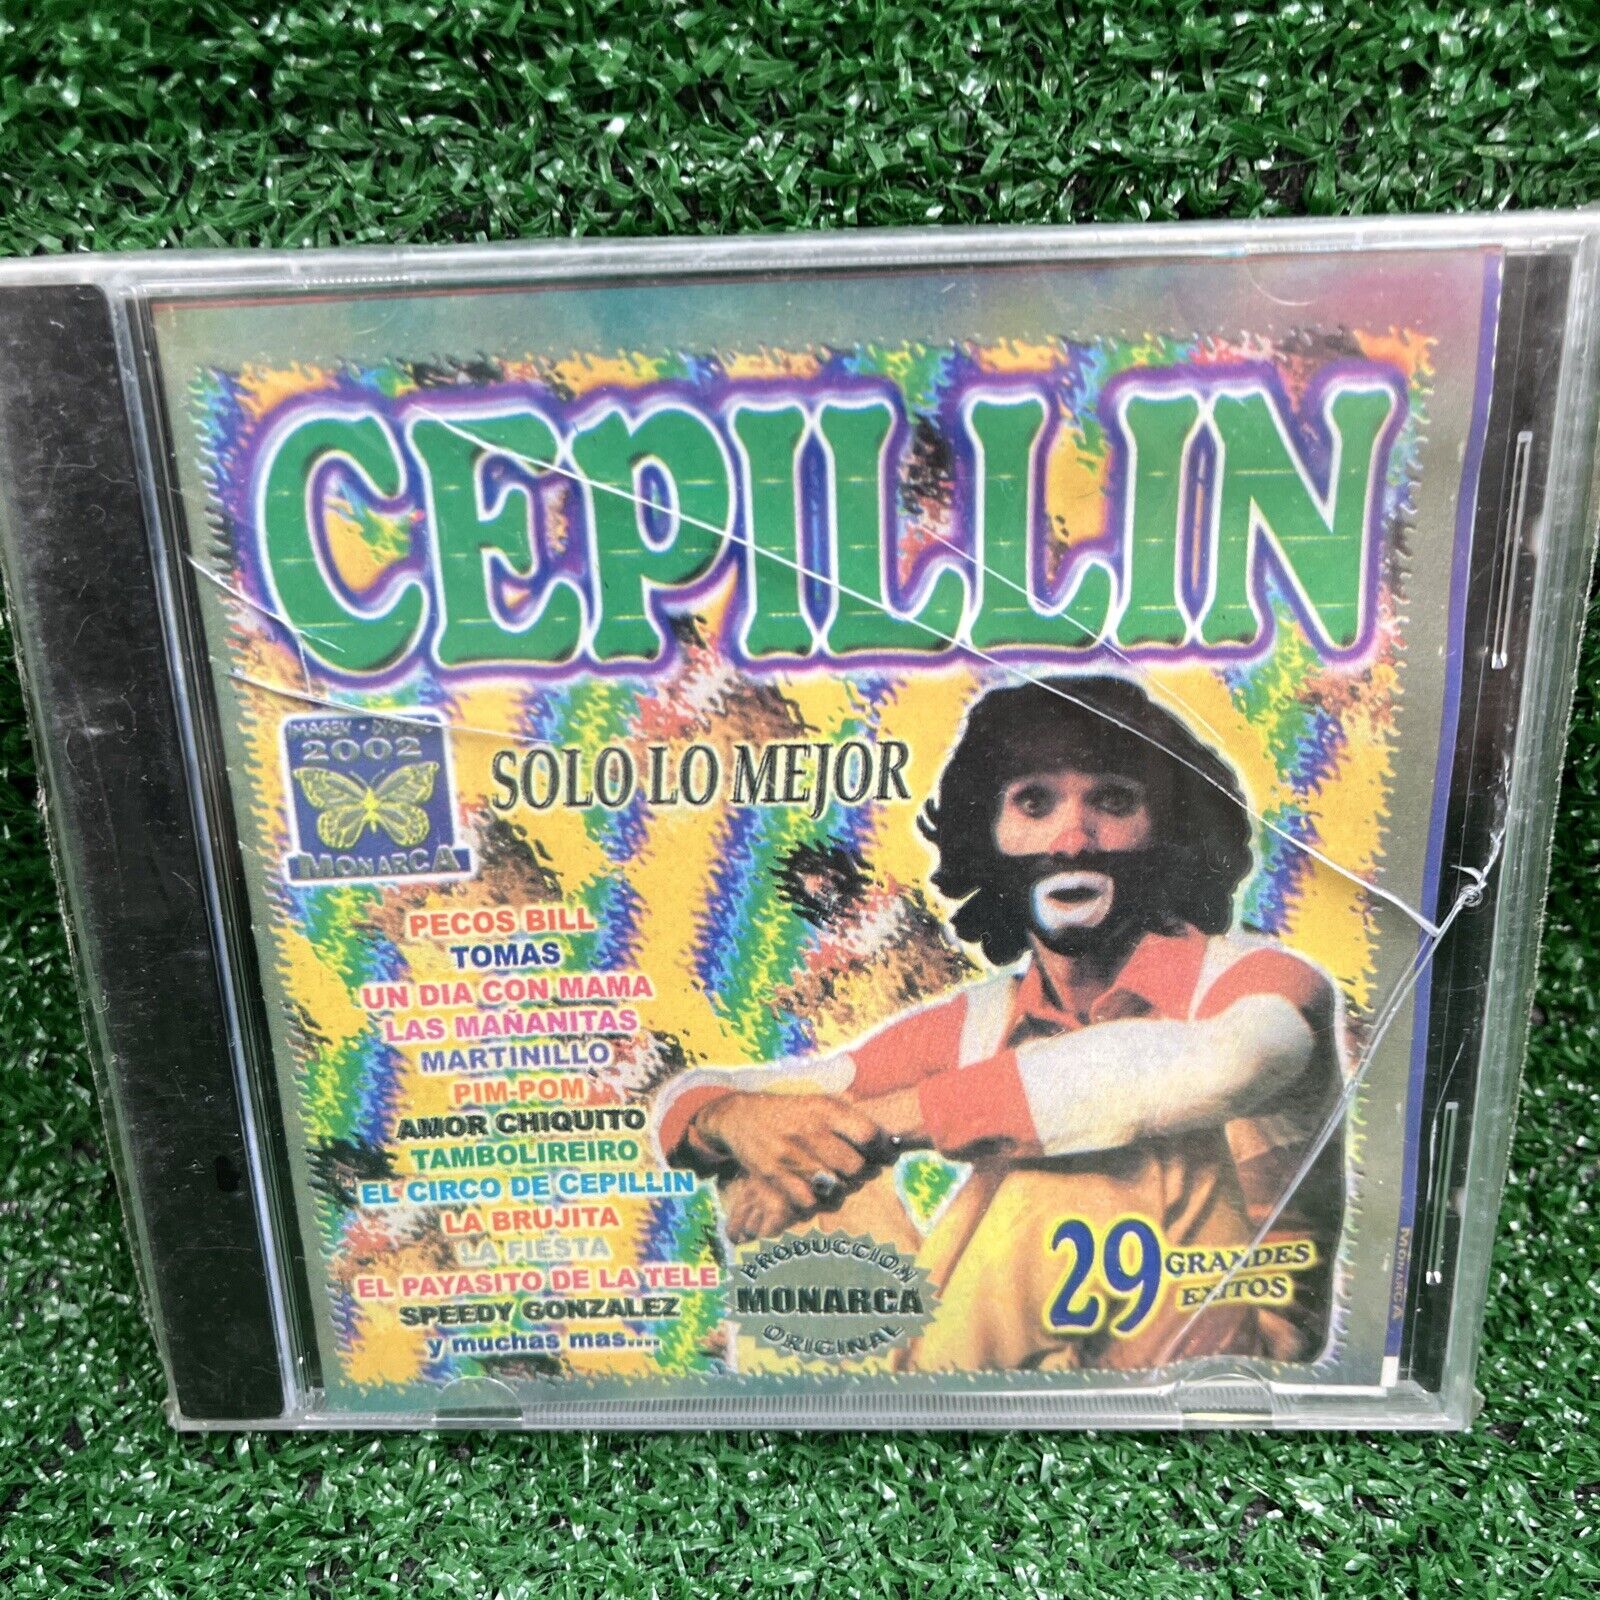 Rare Cepillin Solo Lo Mejor CD Sealed New Cracked Case